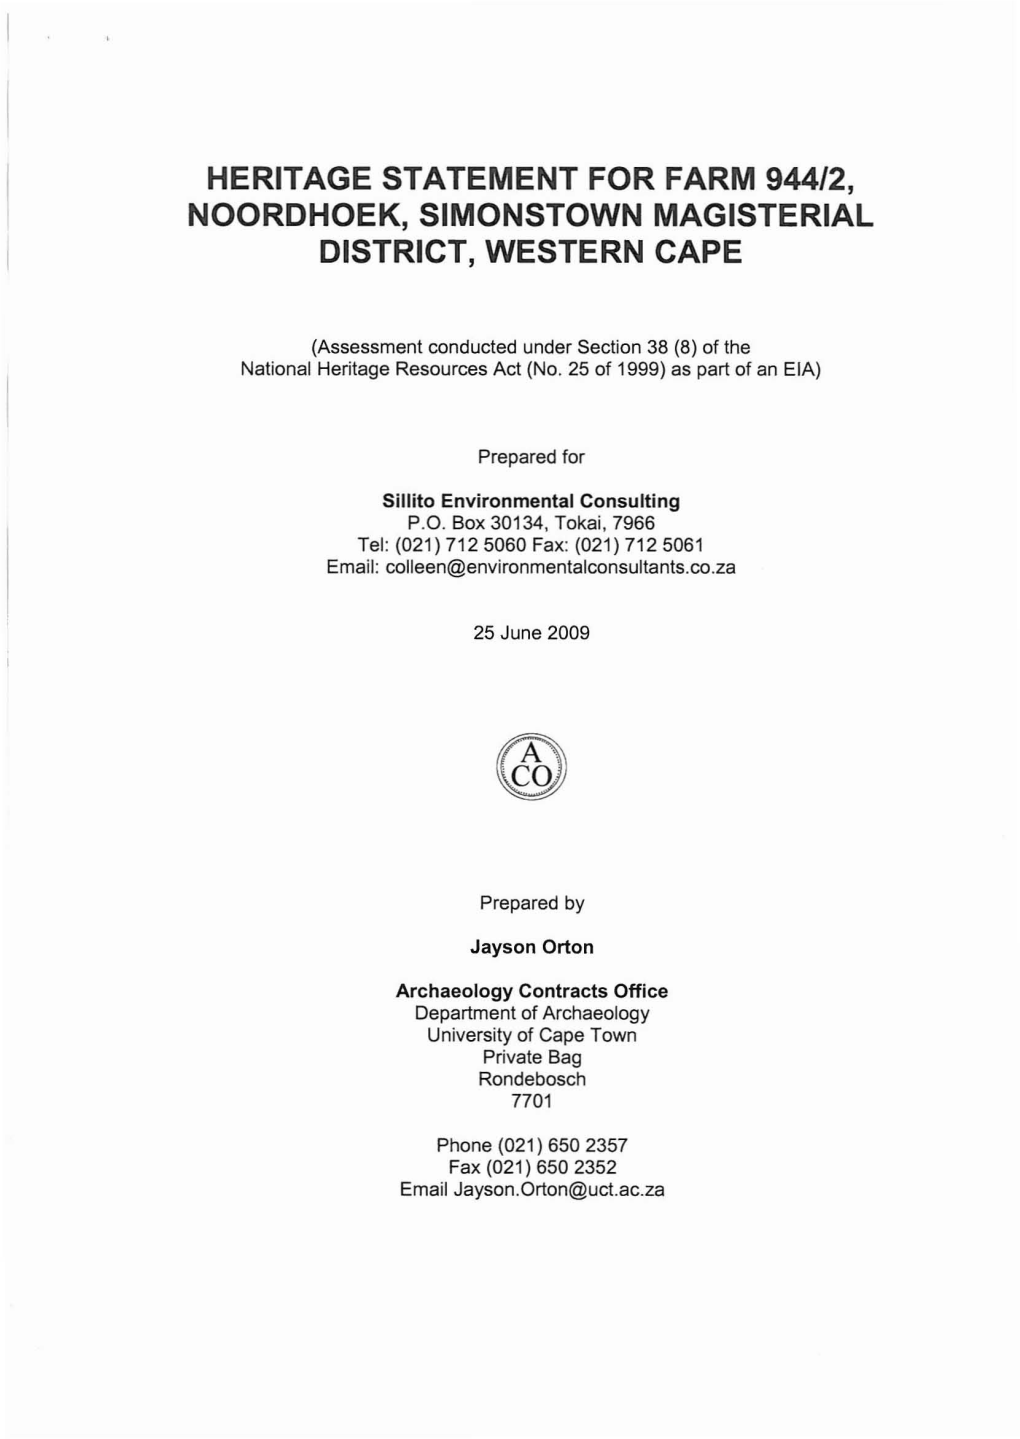 Heritage Statement for Farm 944/2, Noordhoek, Simonstown Magisterial District, Western Cape